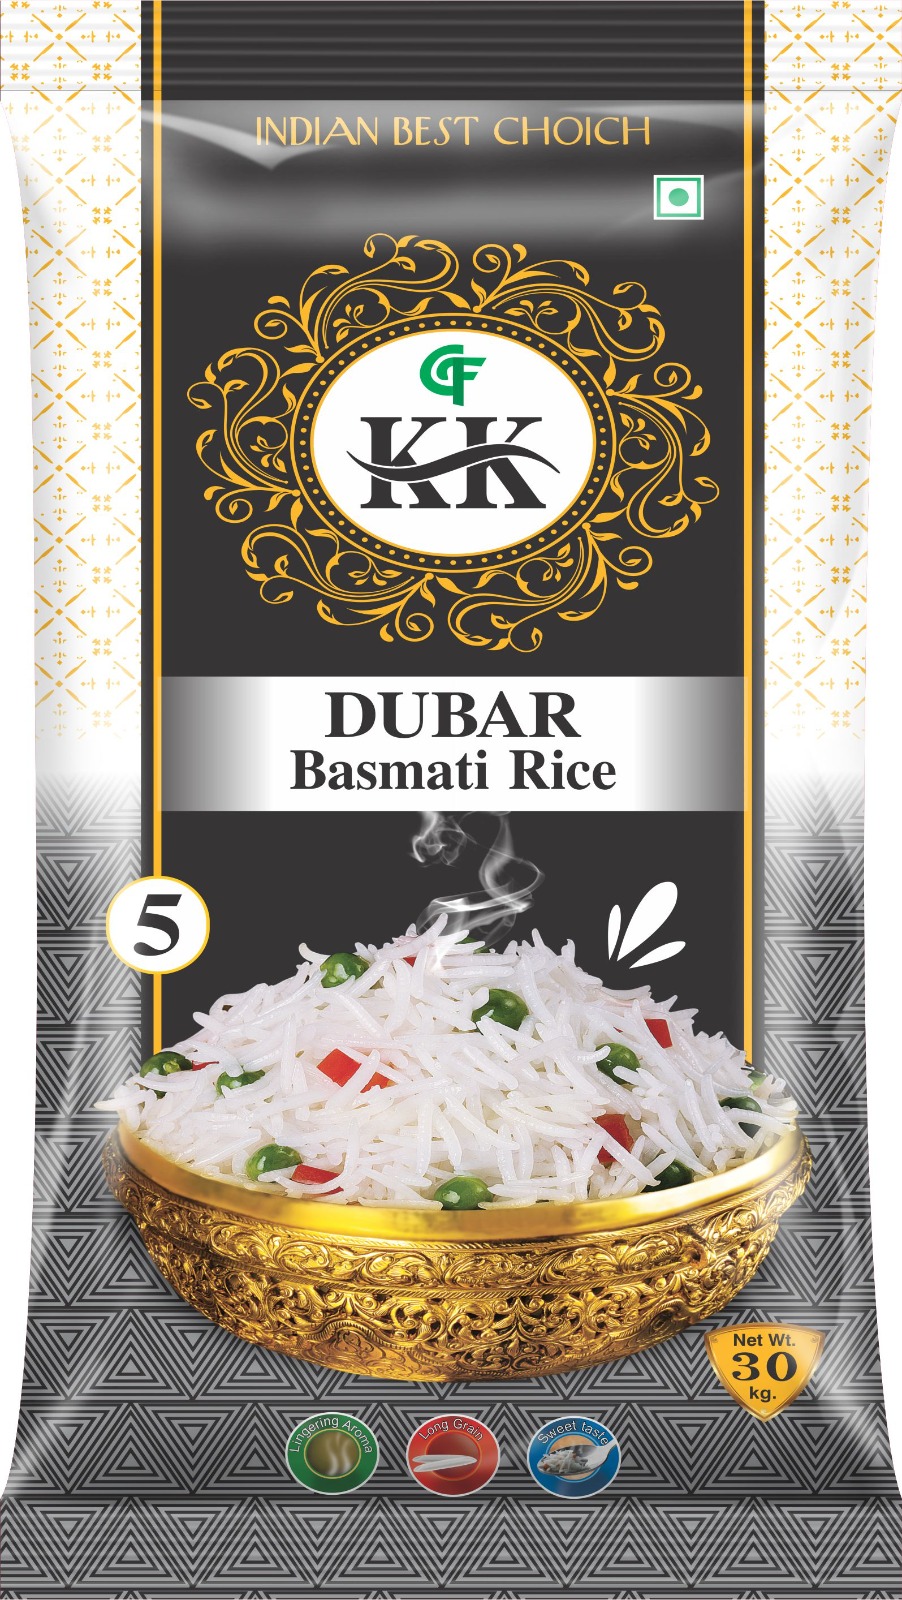 1401 Rice(dubar basmati rice)